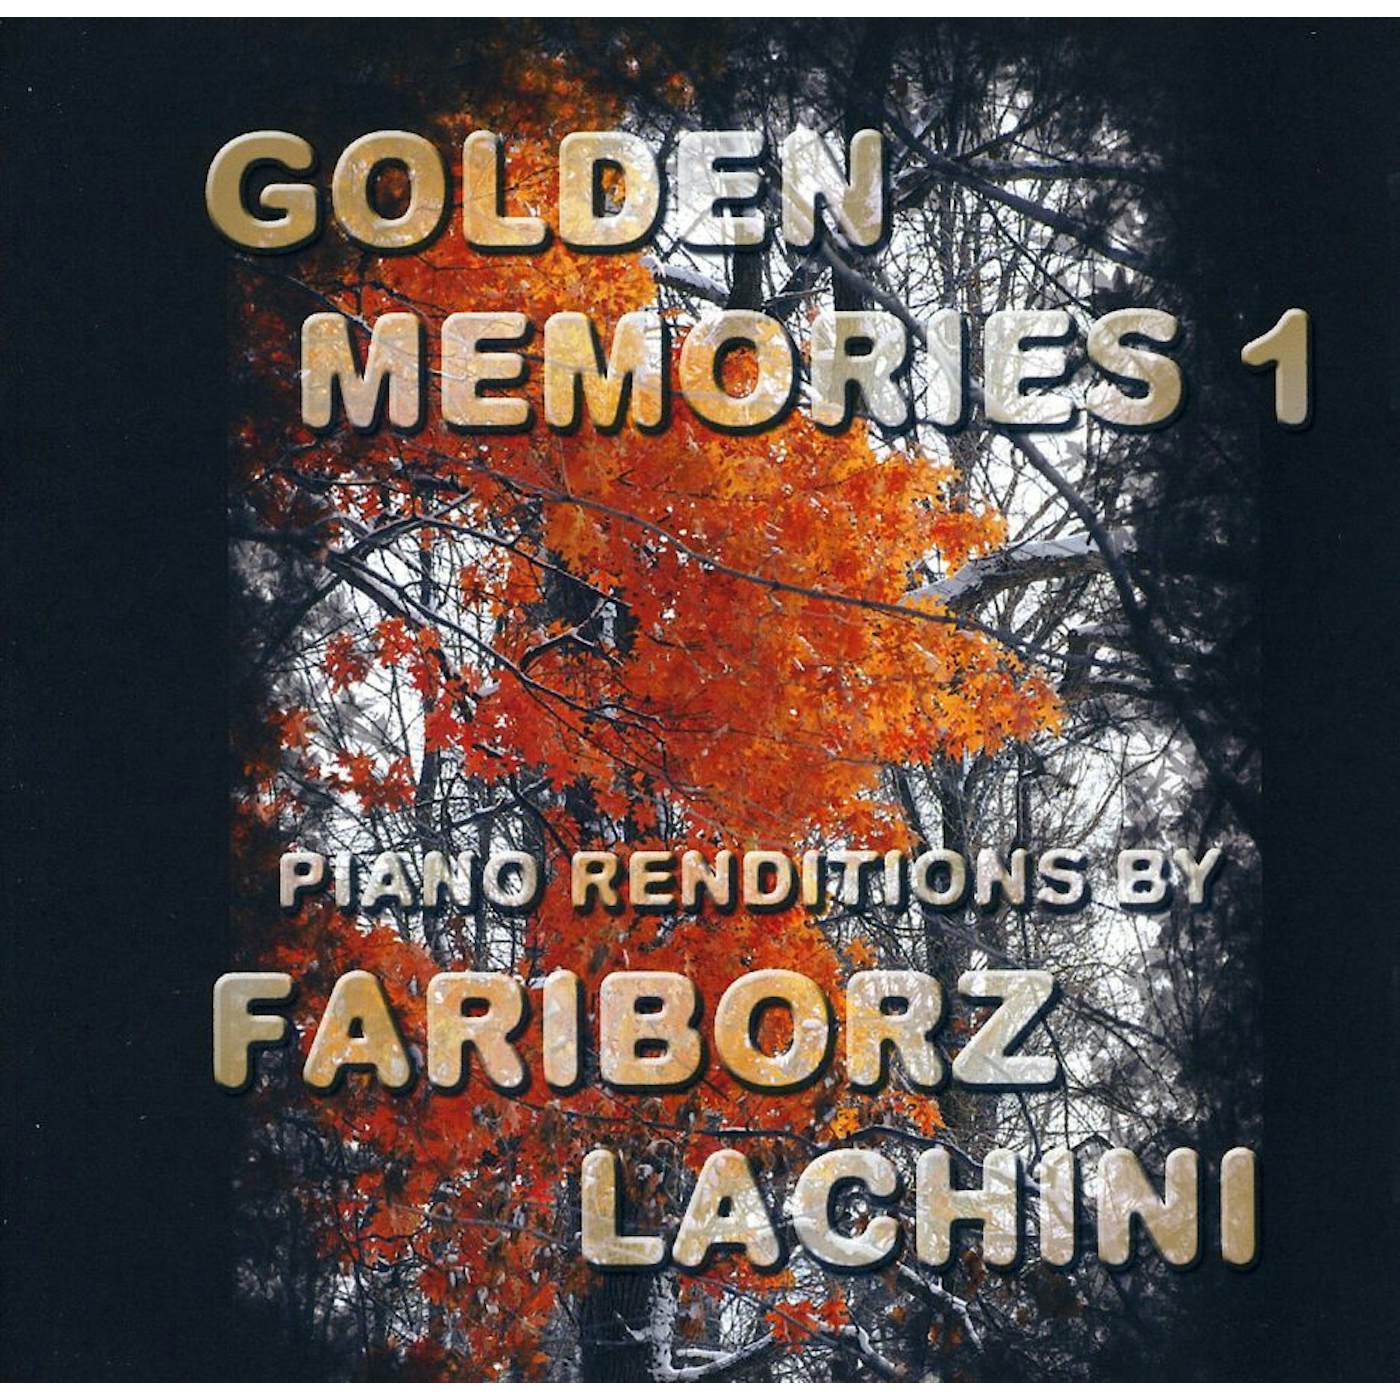 Fariborz Lachini GOLDEN MEMORIES 1 CD